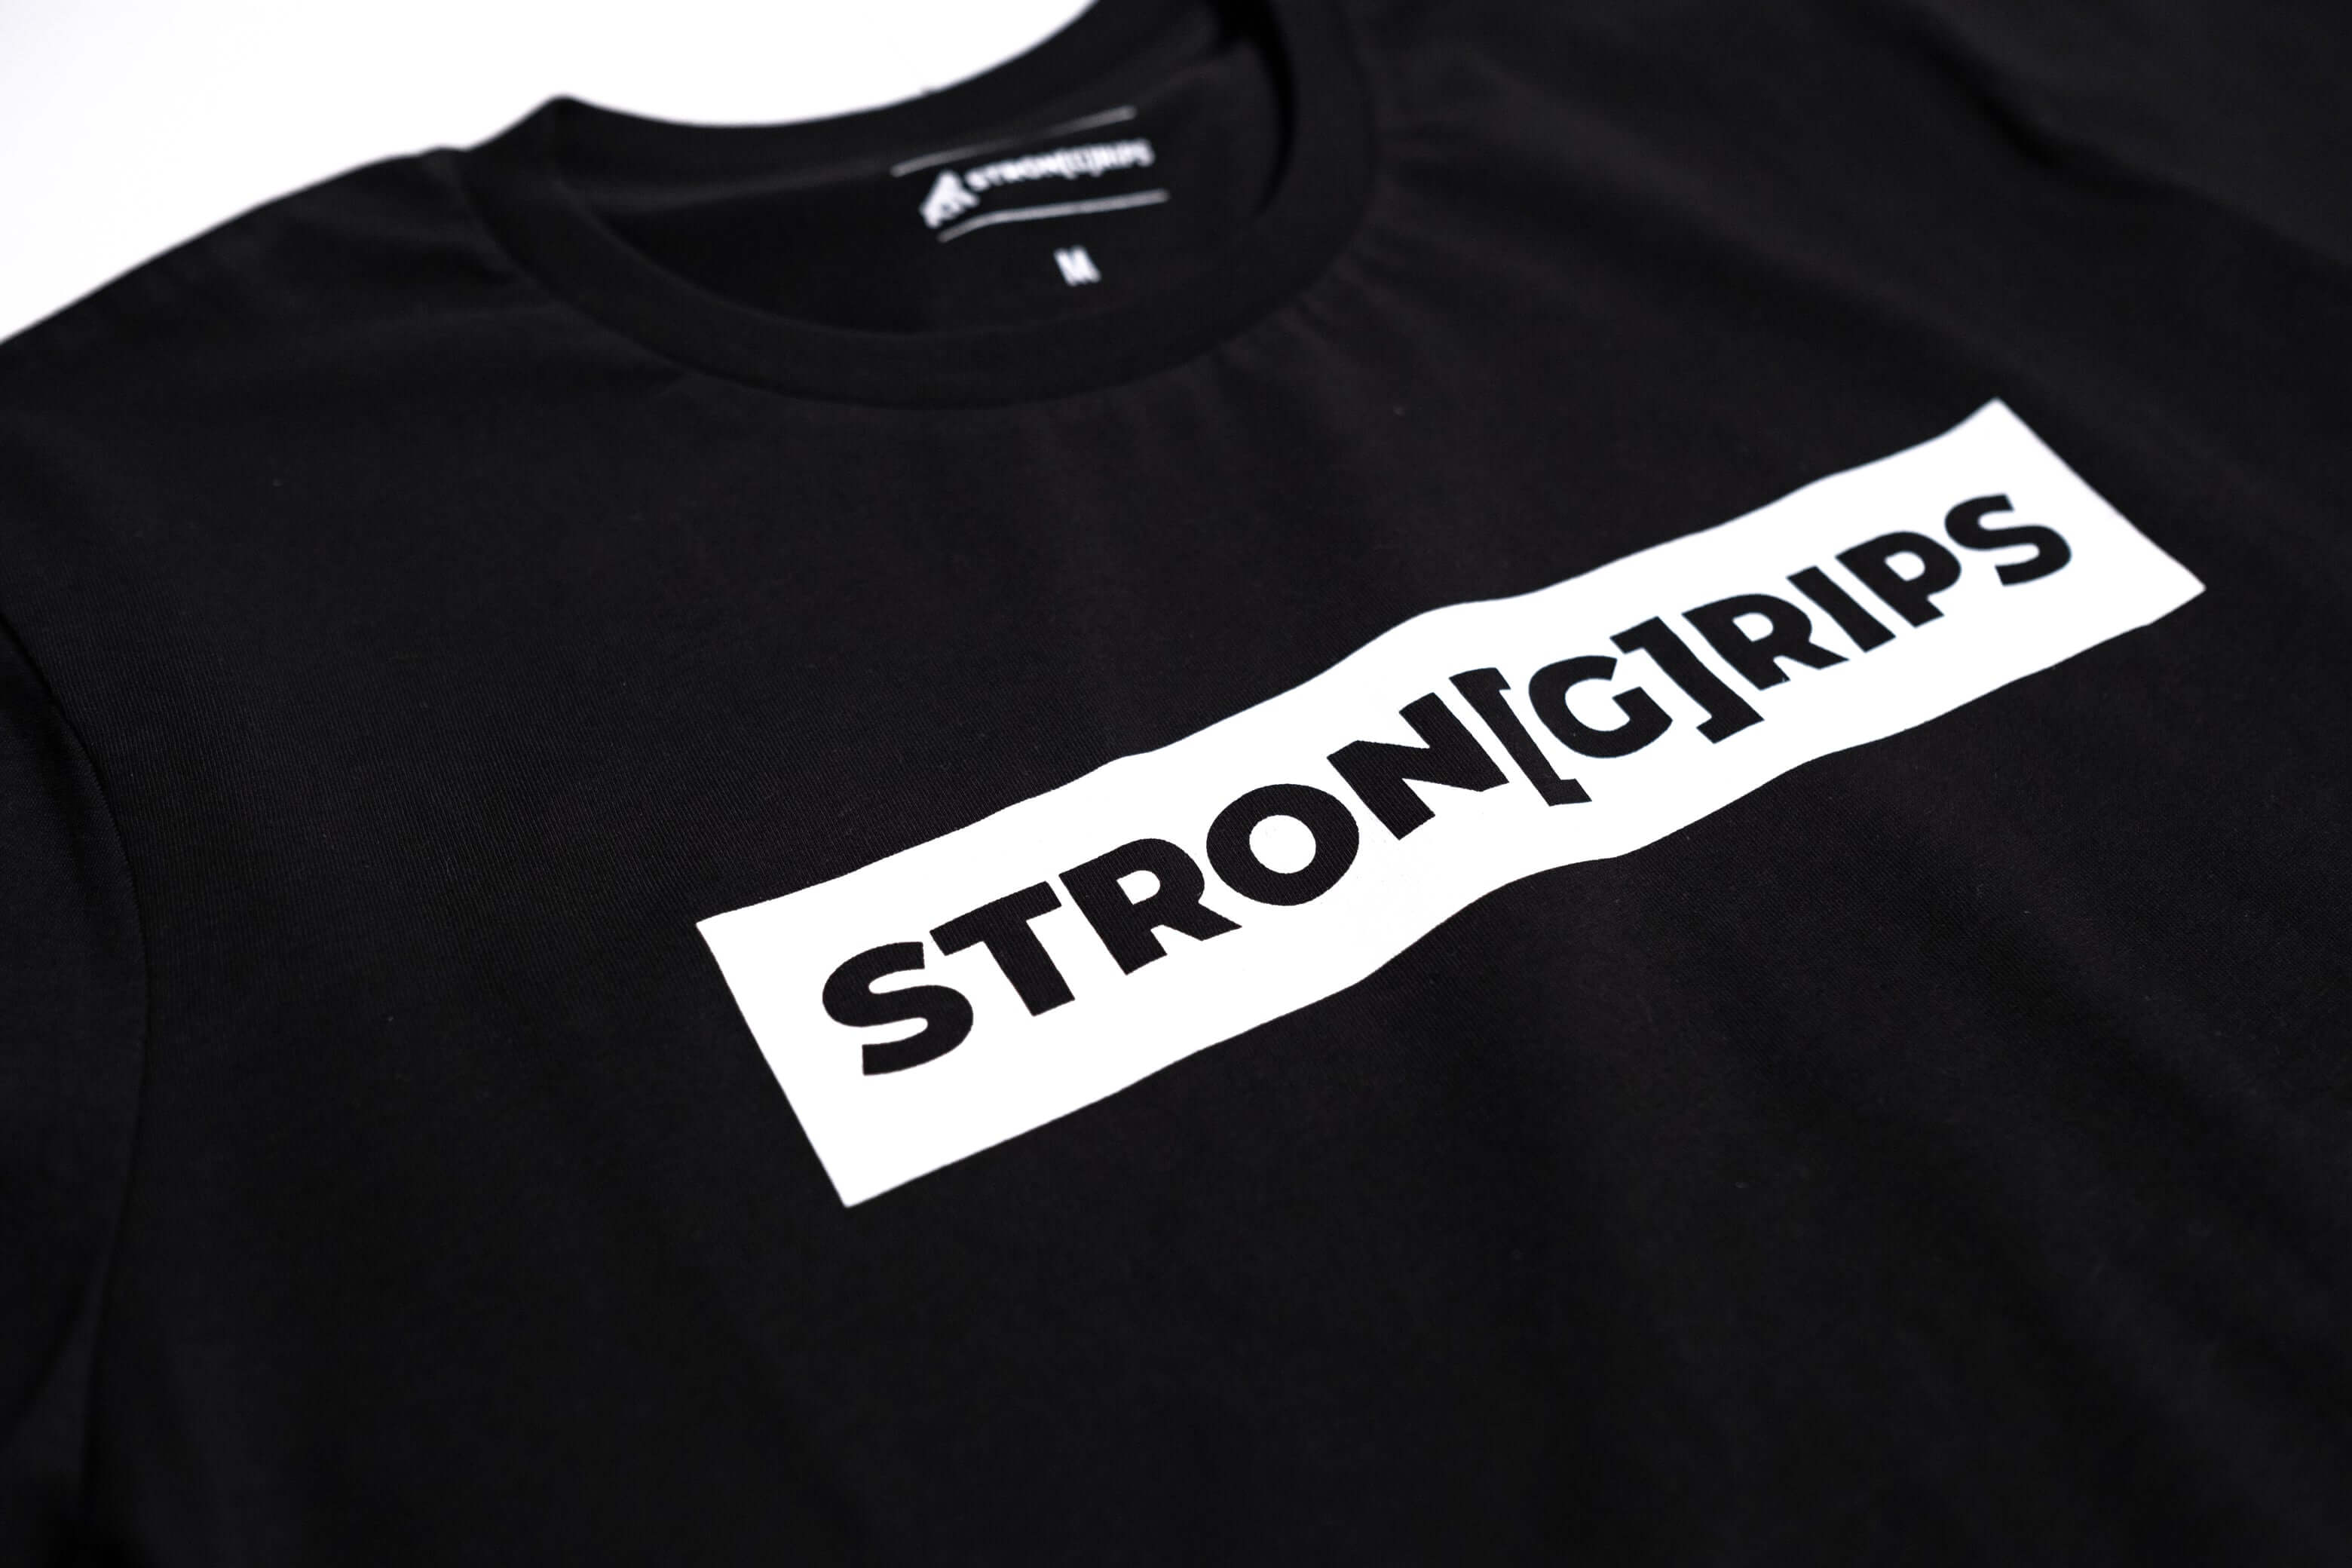 StronGrips 2.0 T-shirt ile en konforlu antrenmanlar